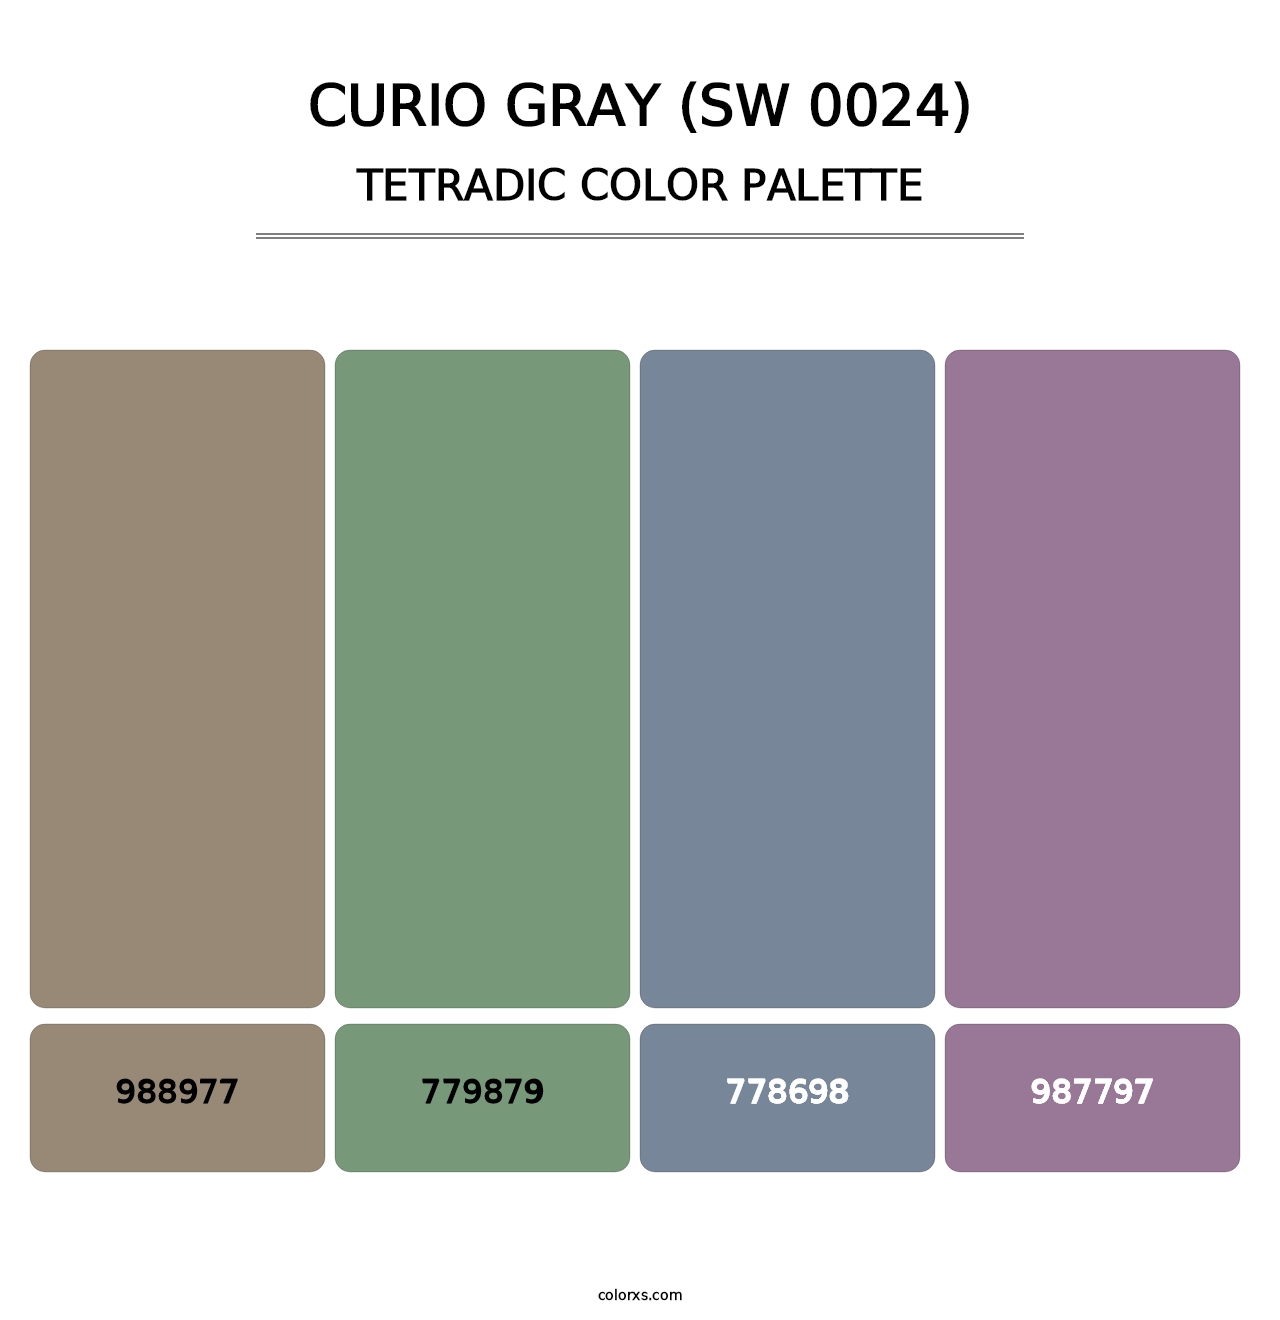 Curio Gray (SW 0024) - Tetradic Color Palette